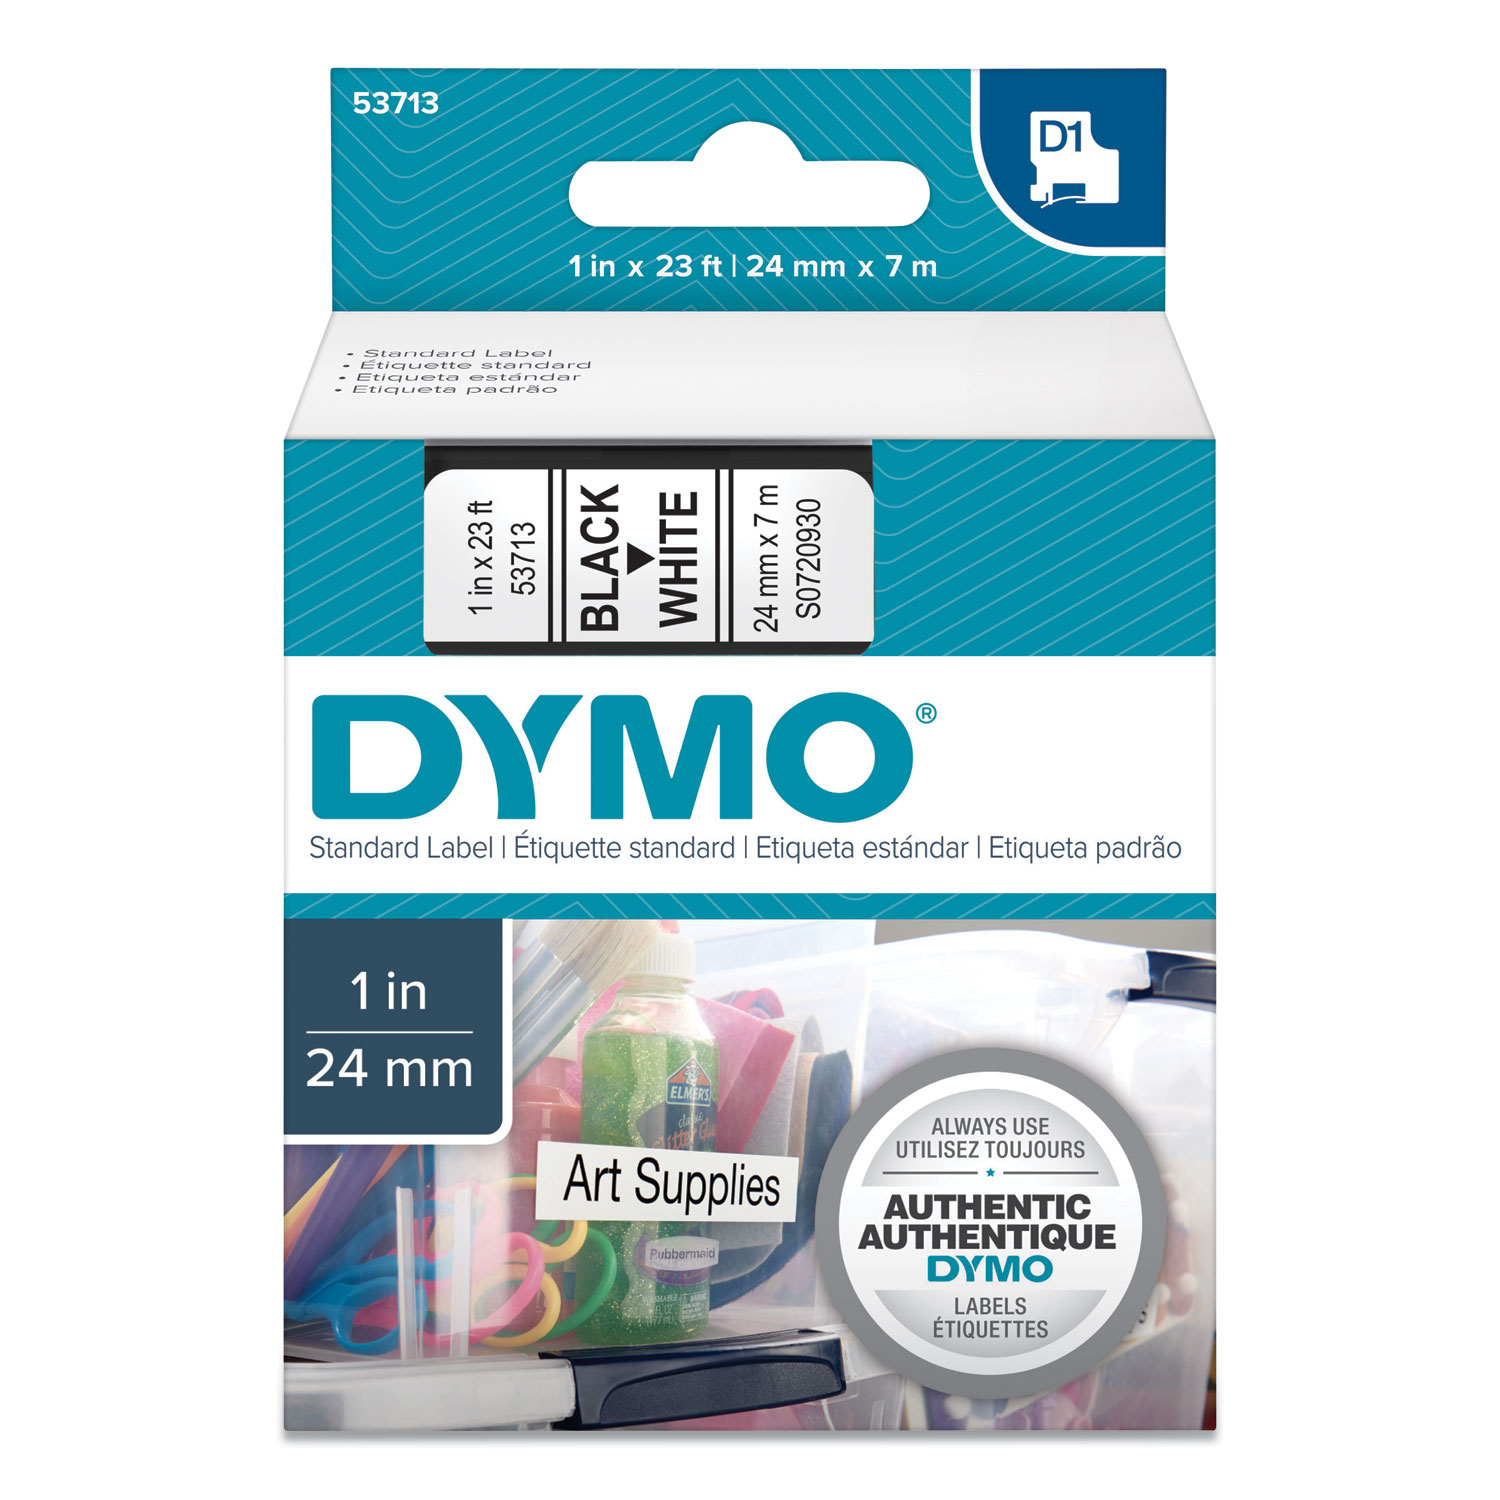  DYMO 30857 Self-Adhesive Name Badge Labels, 2.25 x 4, White, 250/Box (DYM30857) 